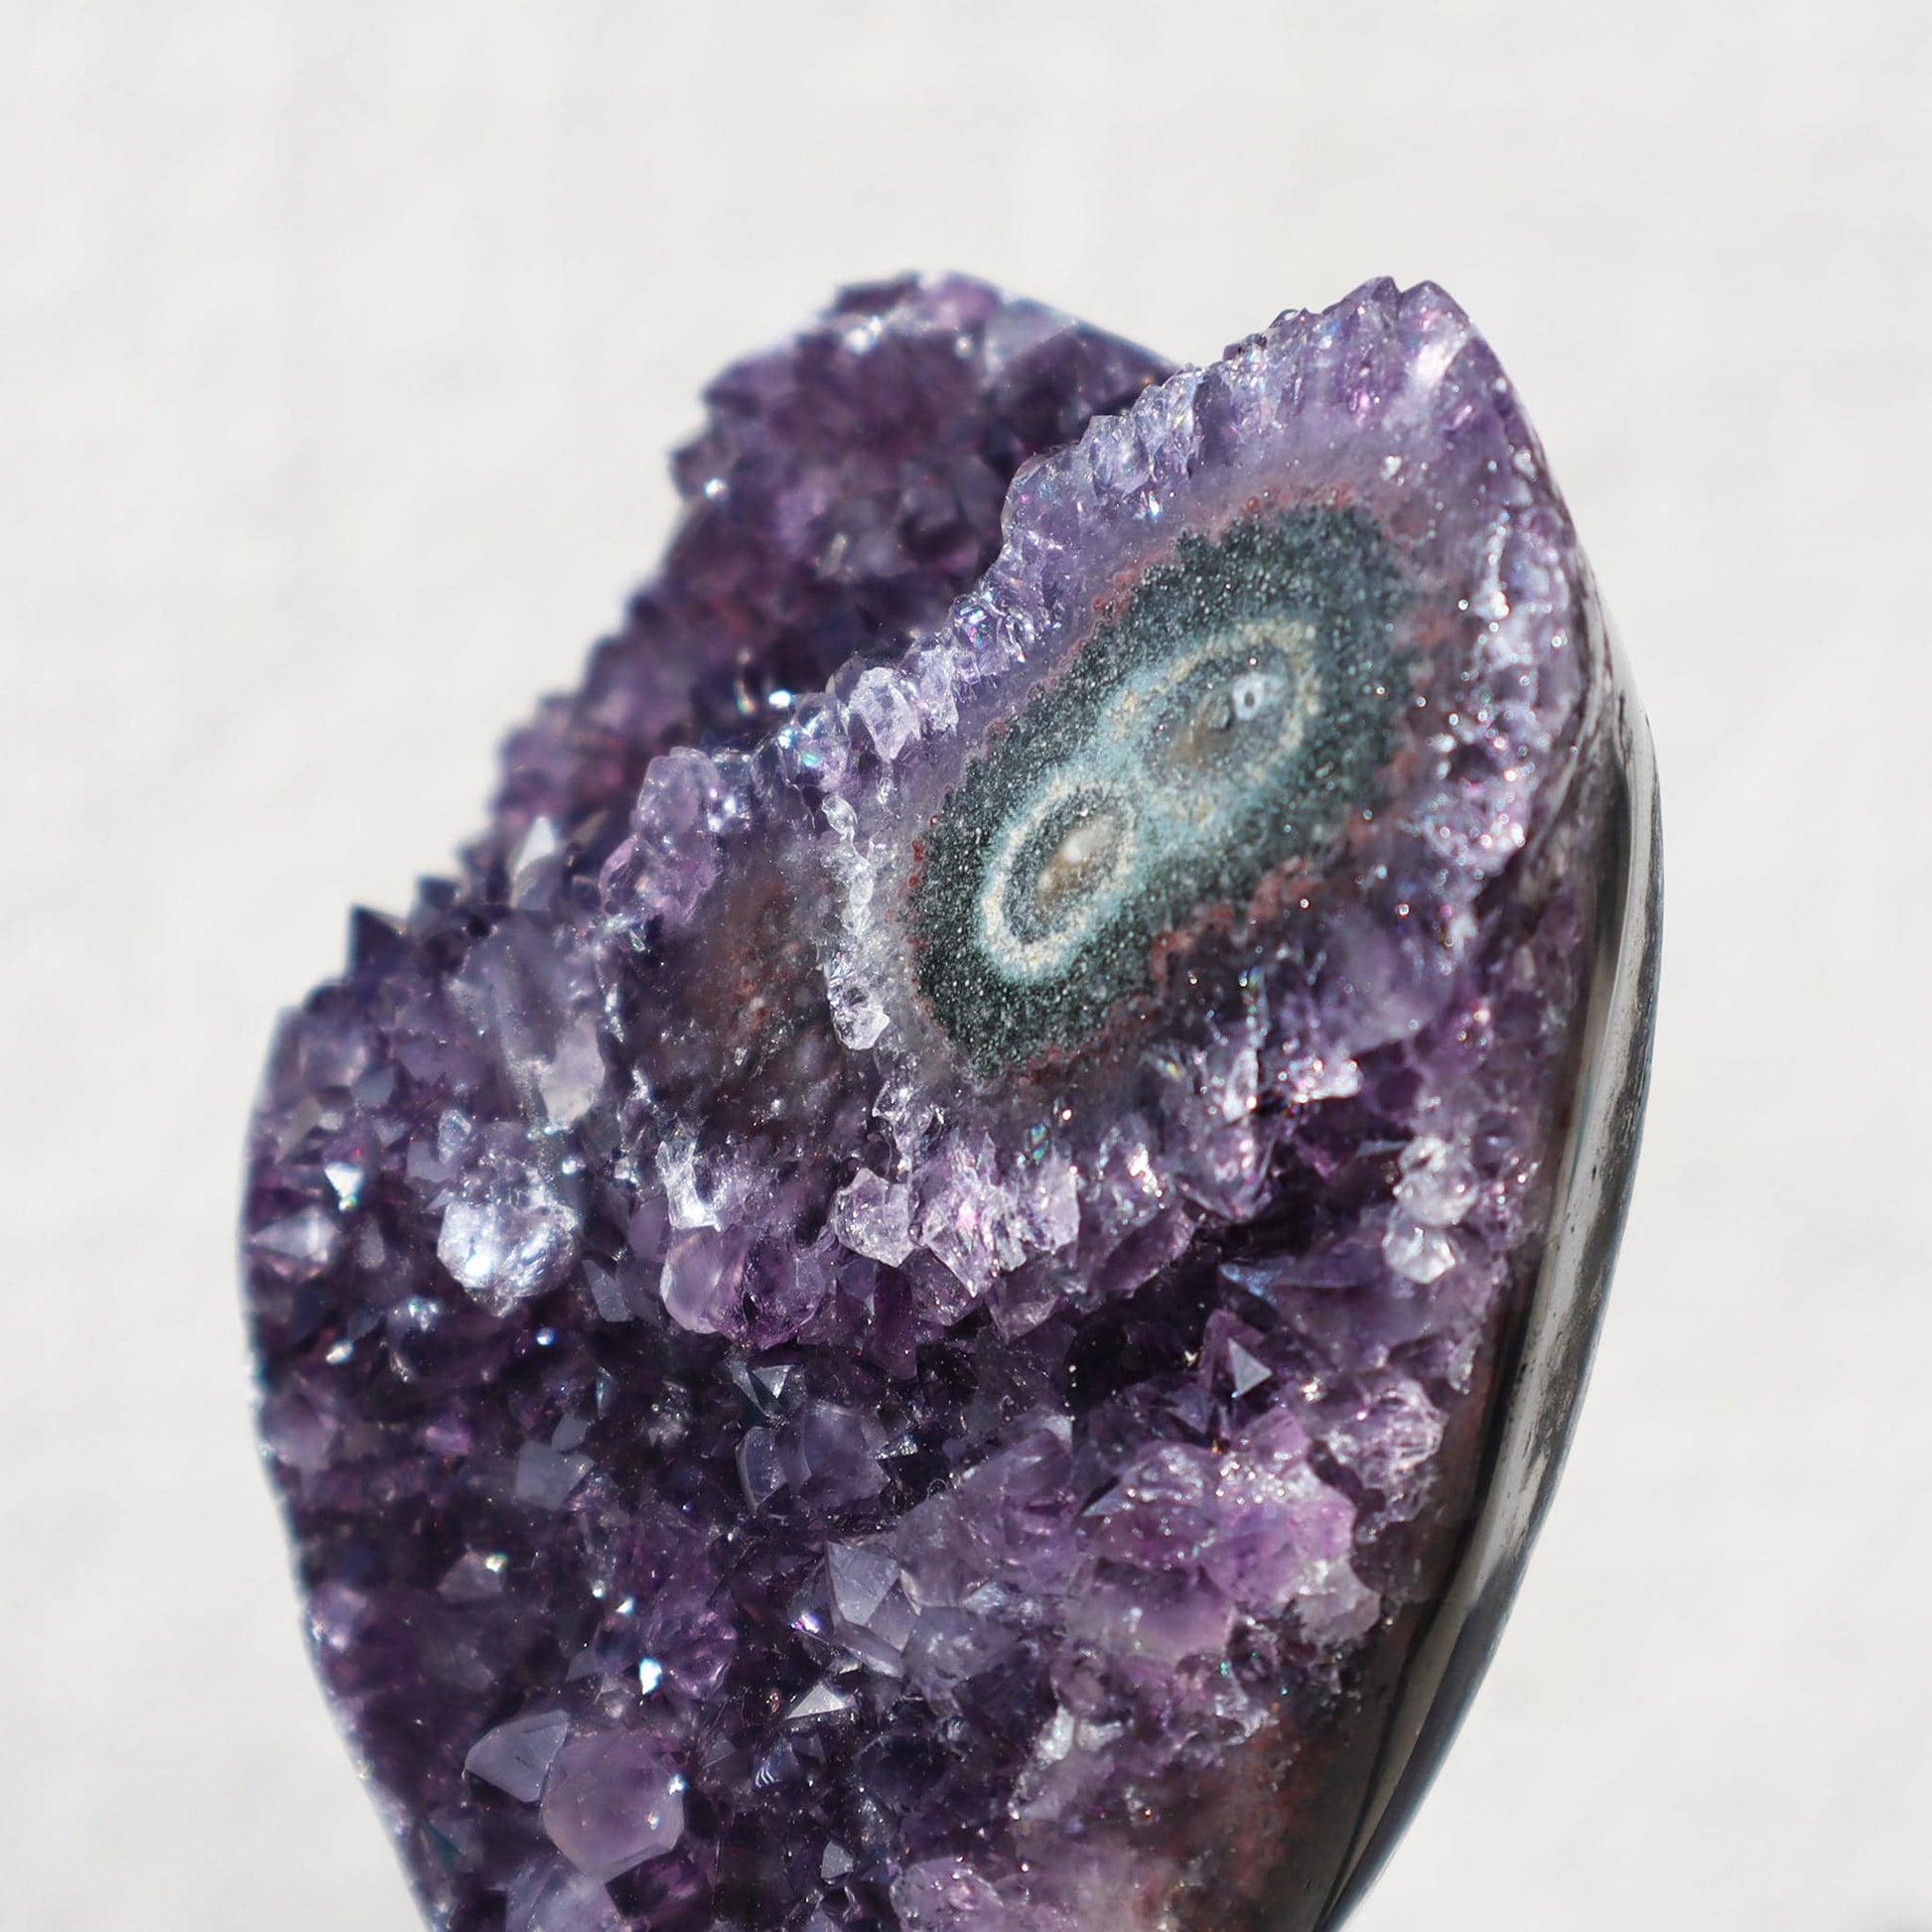 Heart shaped purple quartz amethyst double eye on stand - Deepest Earth